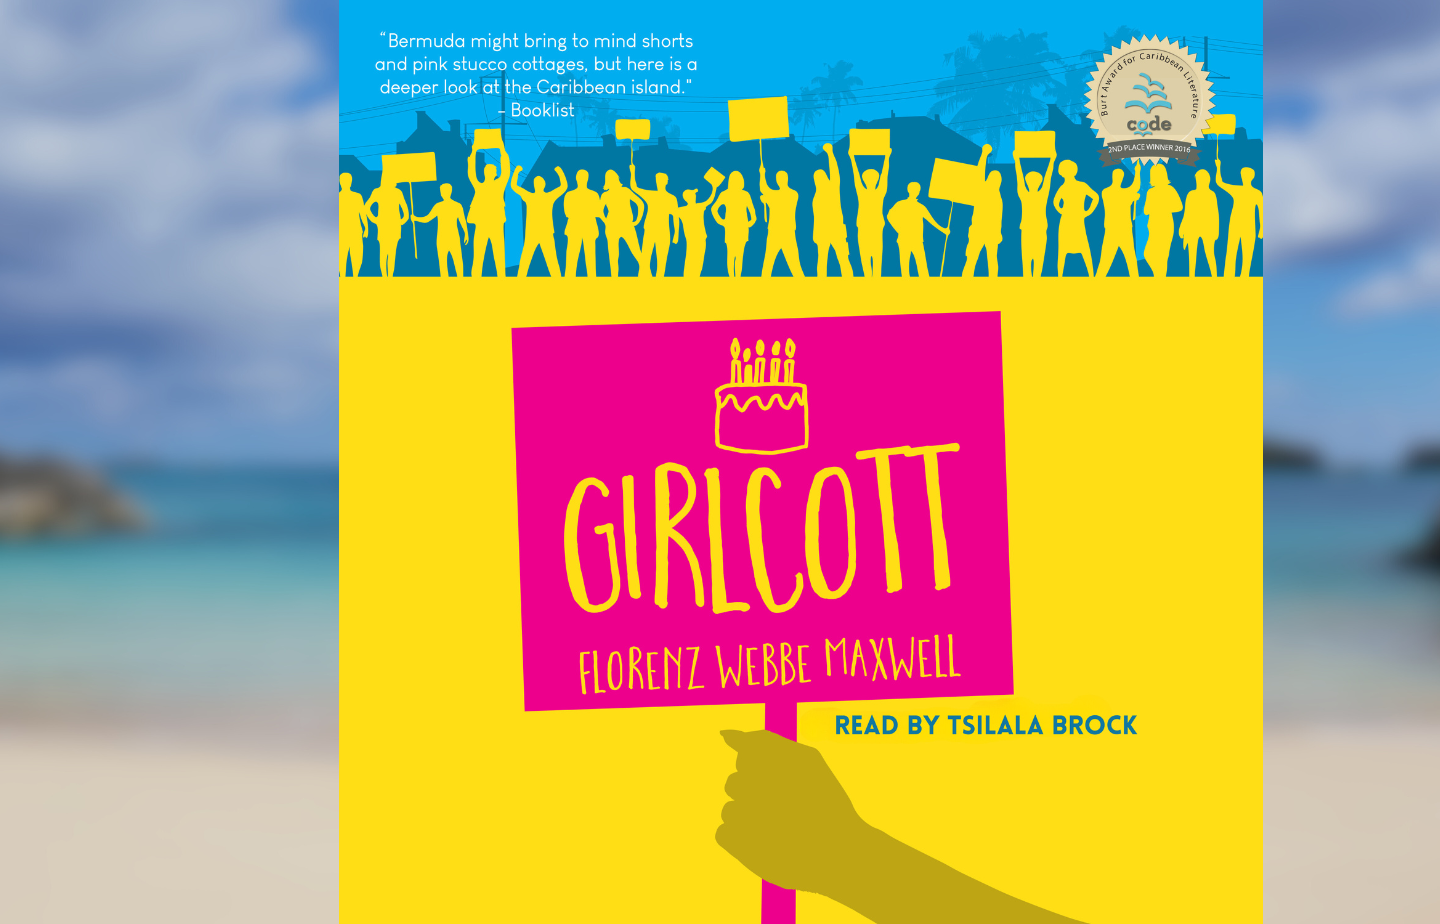 Girlcott audiobook cover in front of a Bermudian beach